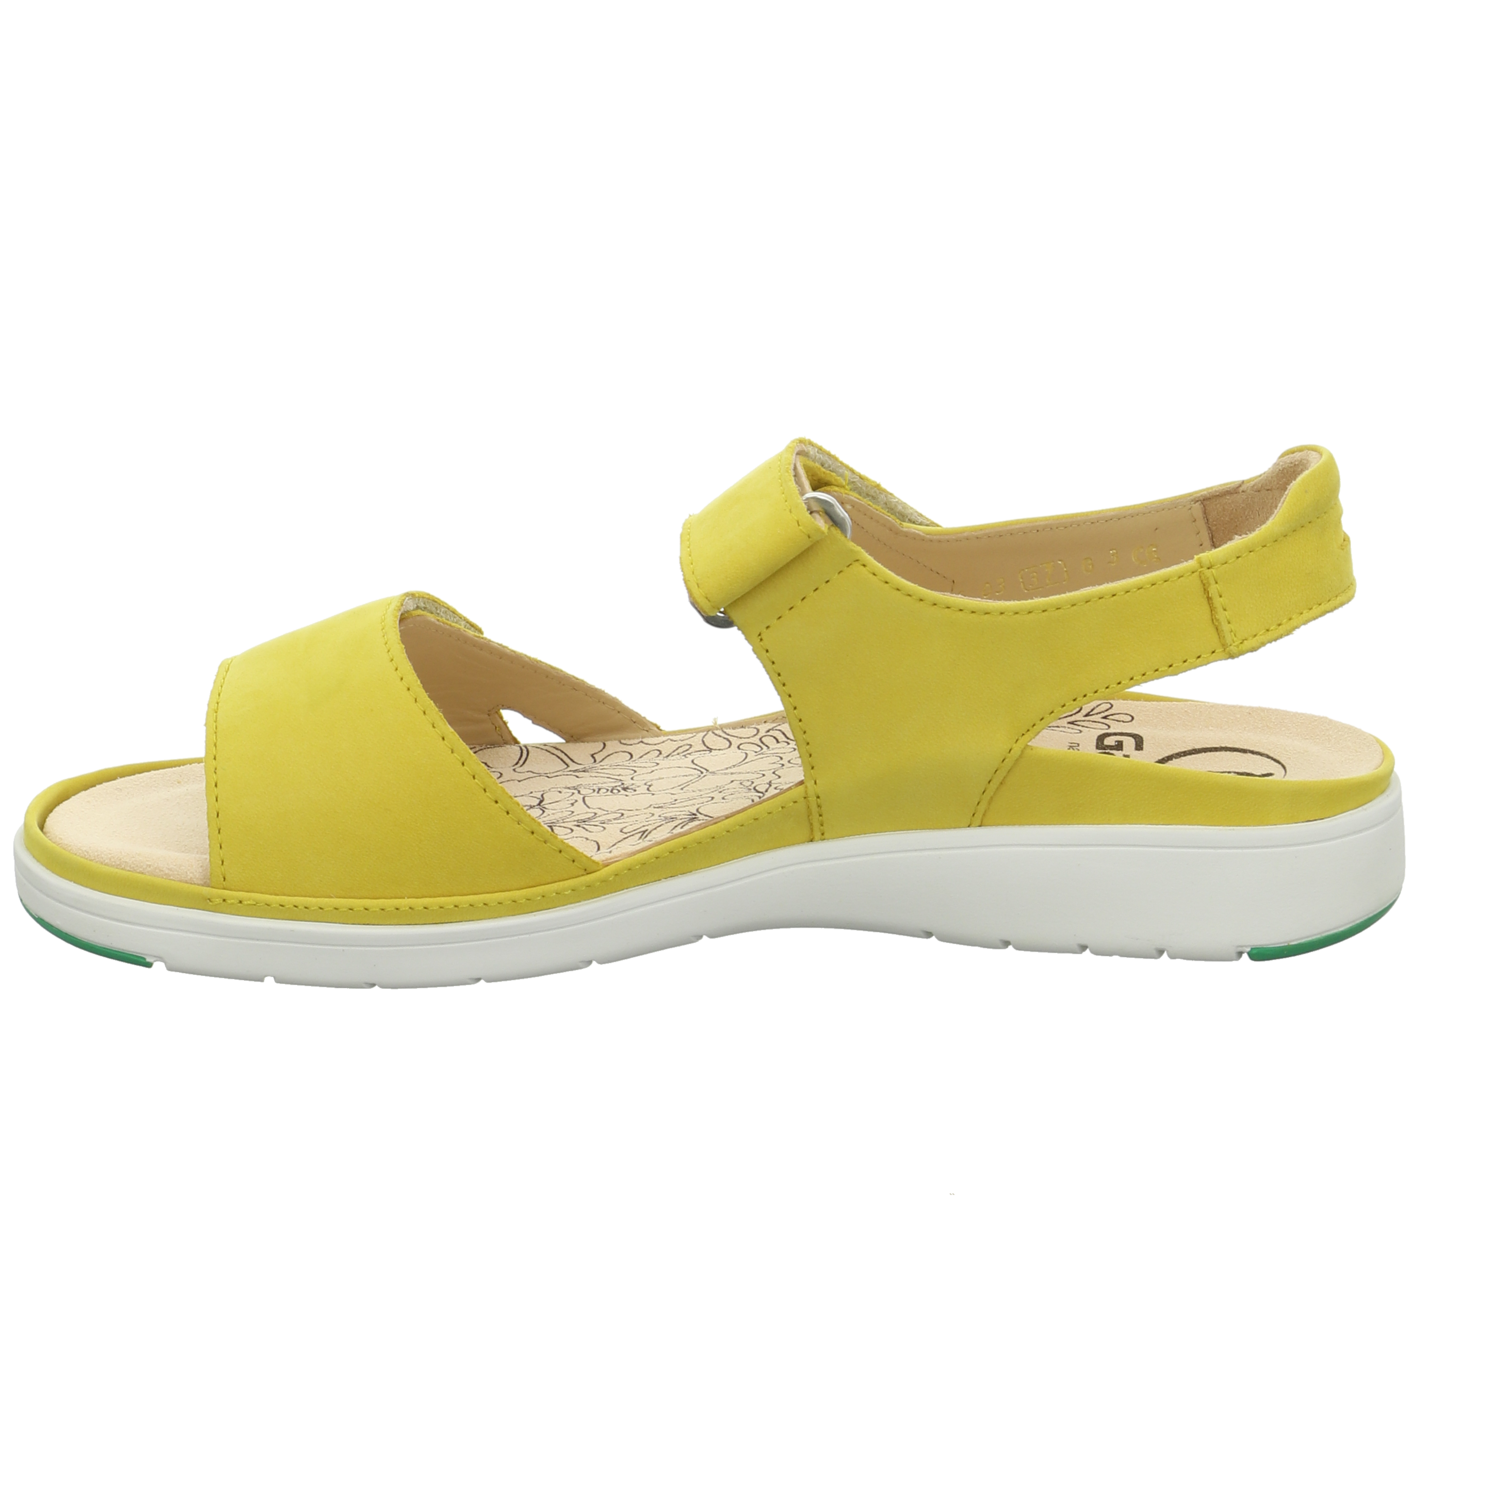 Ganter Comfort-Sandalette bis 25 mm gelb